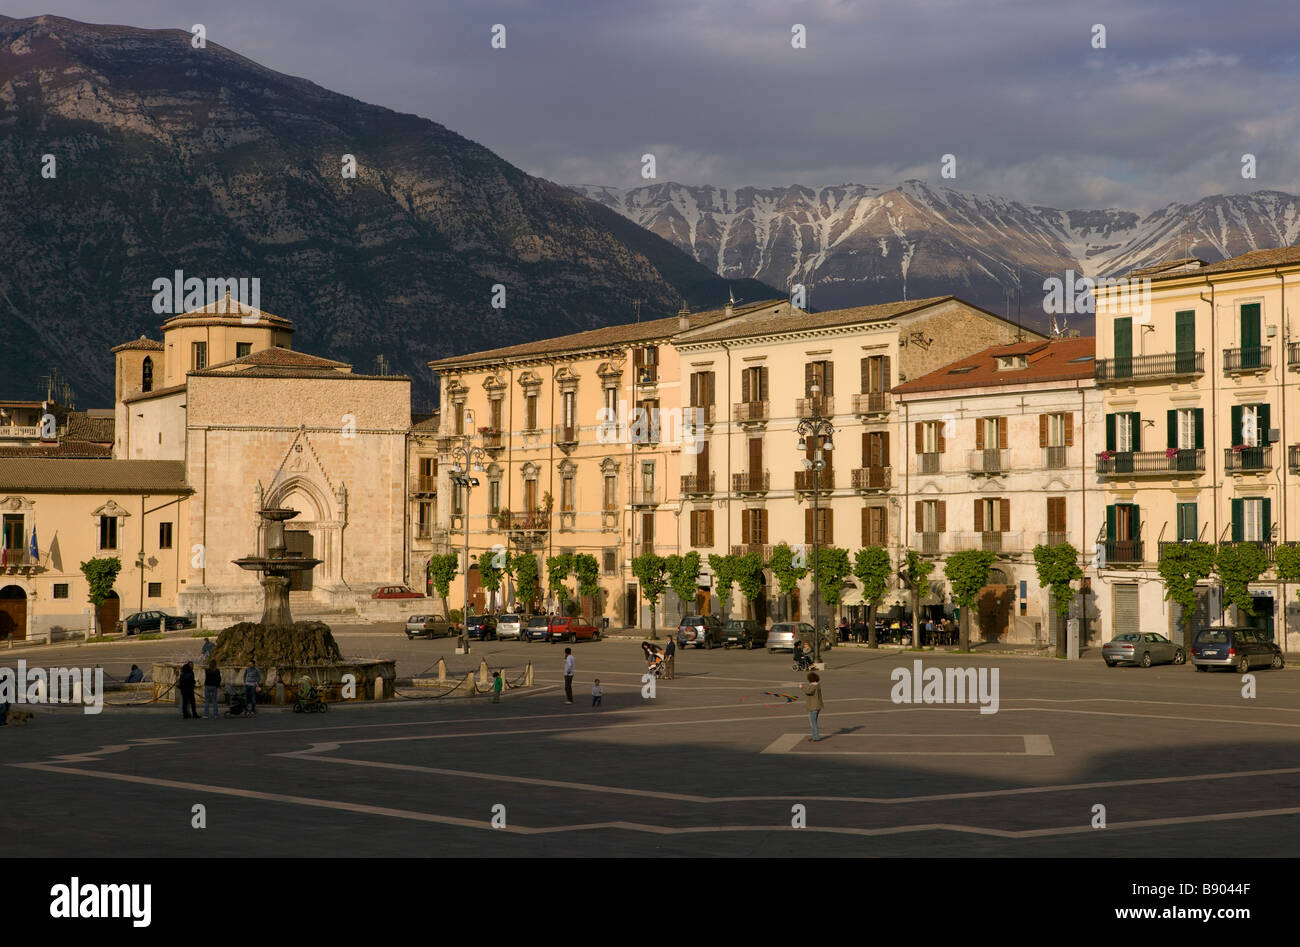 The Piazza Garibaldi Sulmona, Abruzzo, Italy. Stock Photo